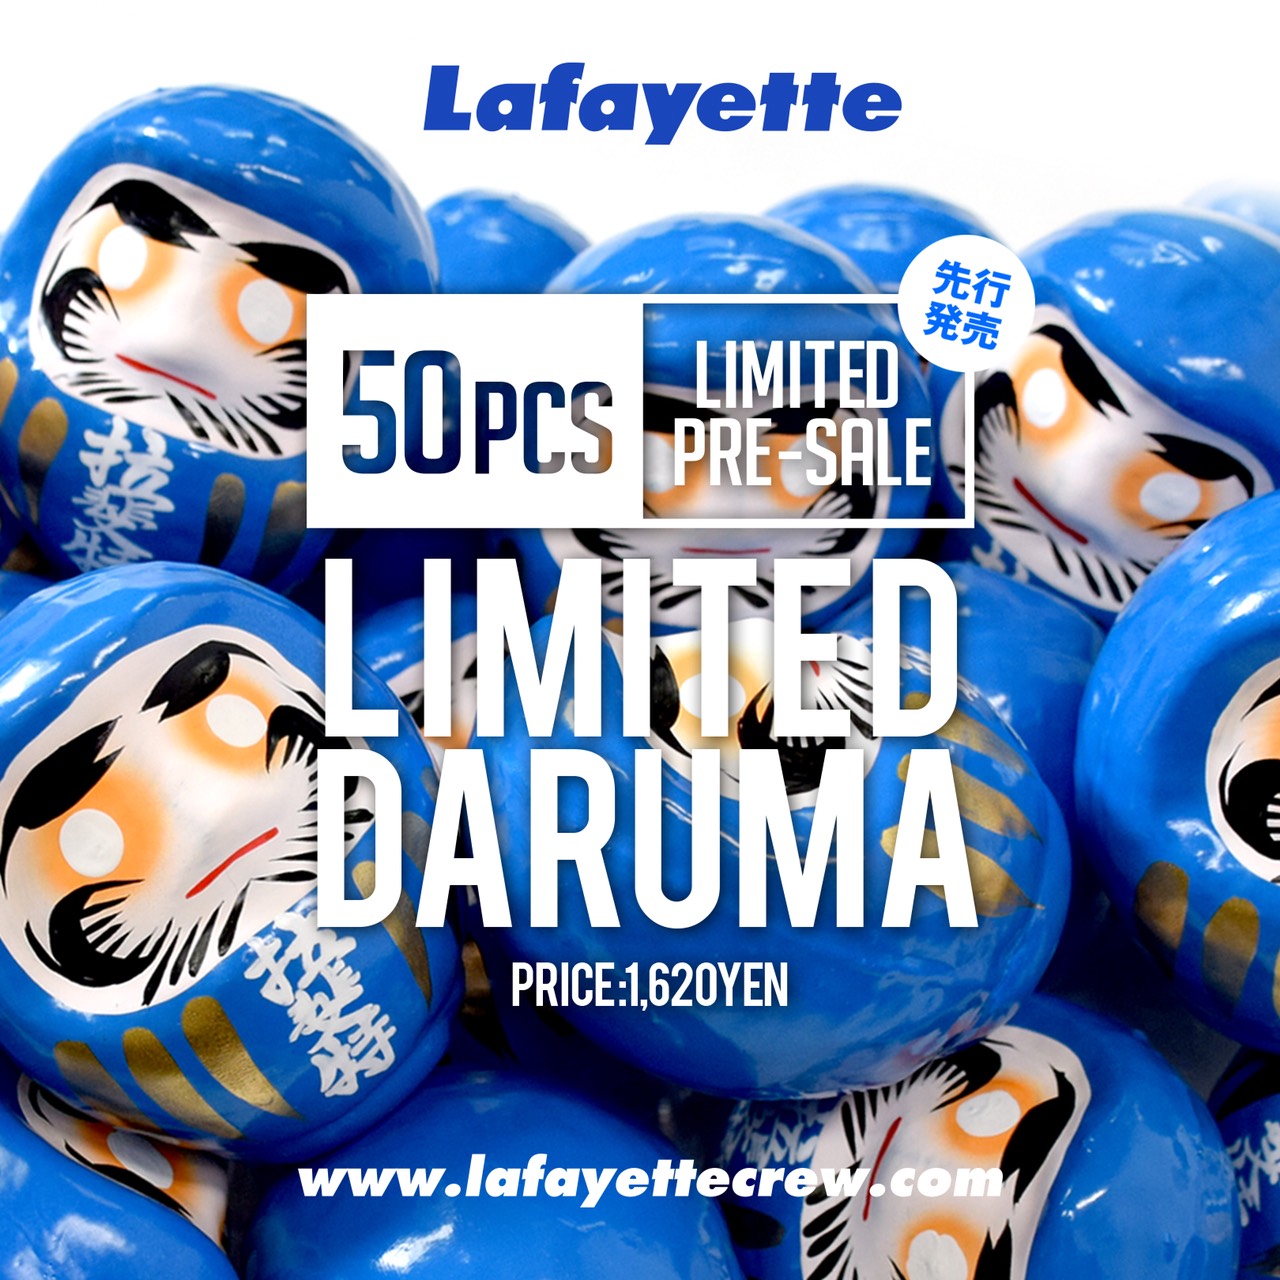 Lafayette Limited Daruma Lafayette Blog ラファイエット ブログ